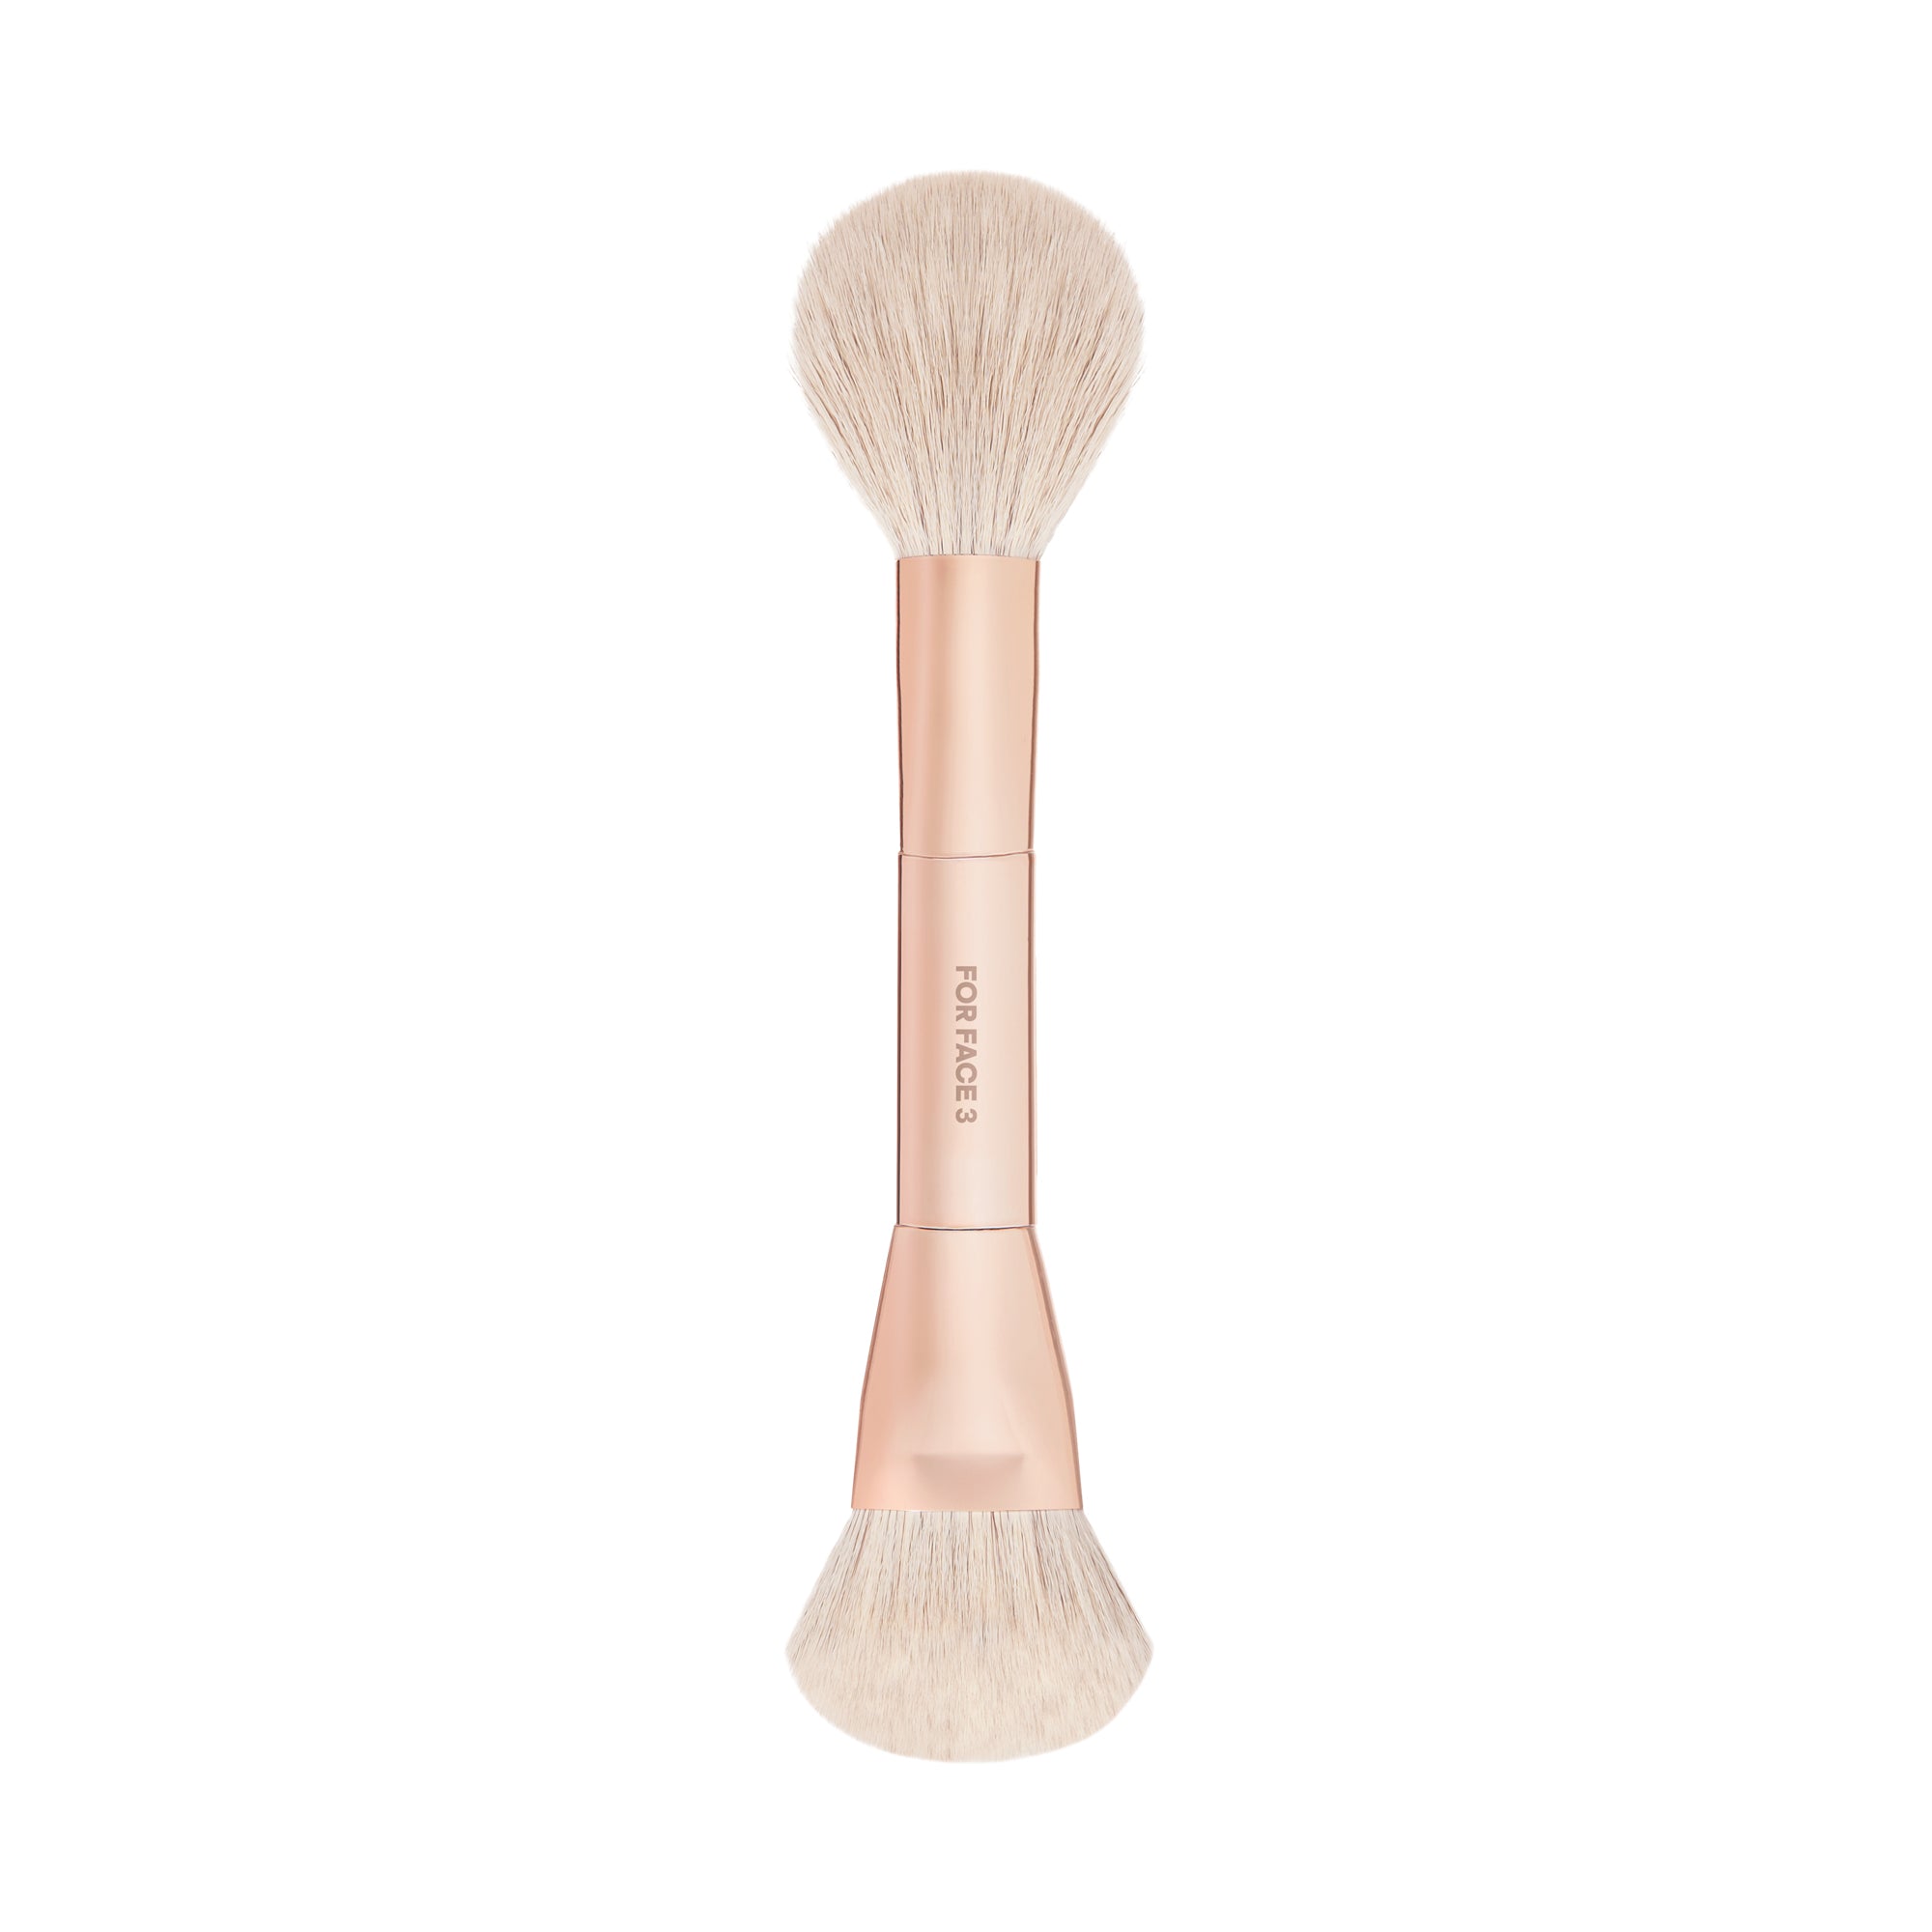 Patrick Ta Dual-Ended Blush Brush - Double Ended Makeup Brush for Cream ...